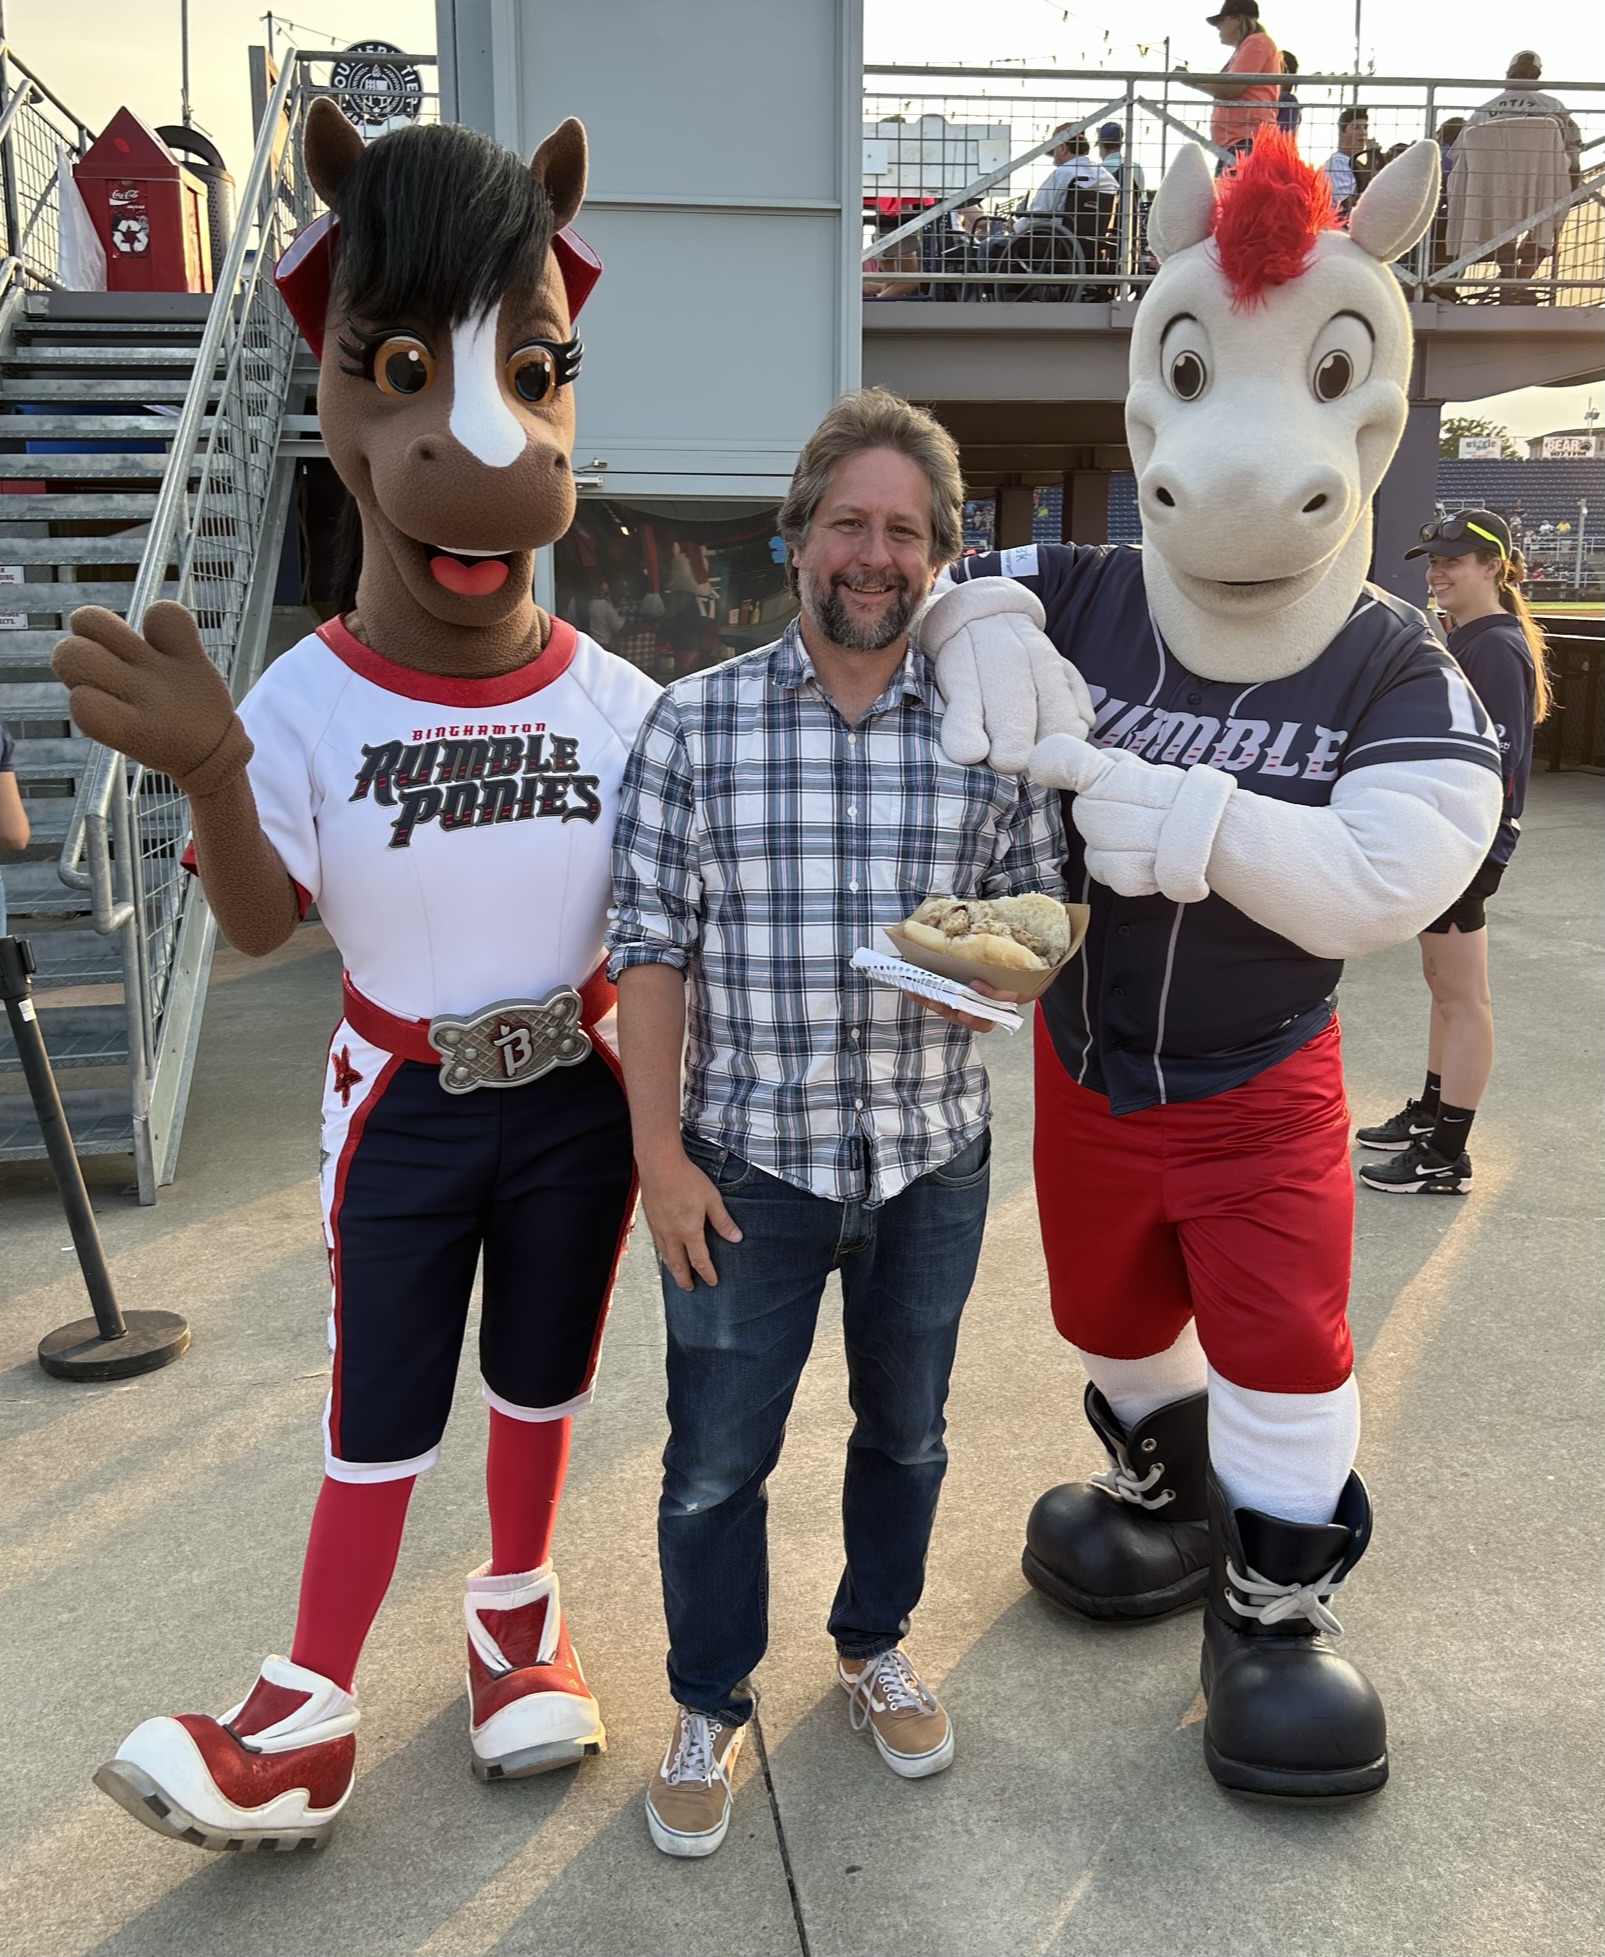 Ben with the Binghamton mascots